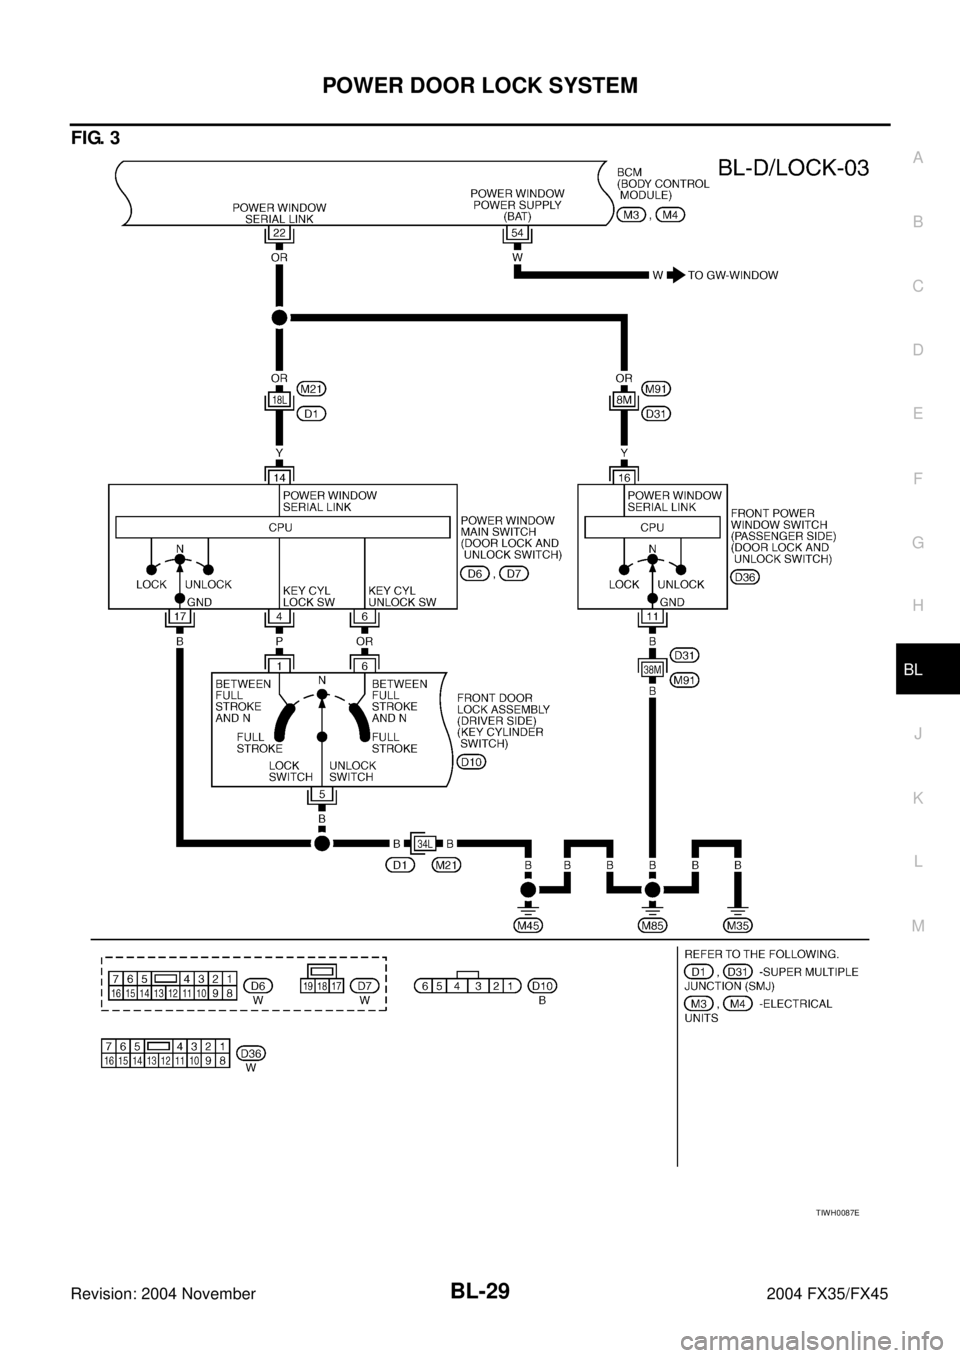 INFINITI FX35 2004  Service Manual POWER DOOR LOCK SYSTEM
BL-29
C
D
E
F
G
H
J
K
L
MA
B
BL
Revision: 2004 November 2004 FX35/FX45
FIG. 3
TIWH0087E 